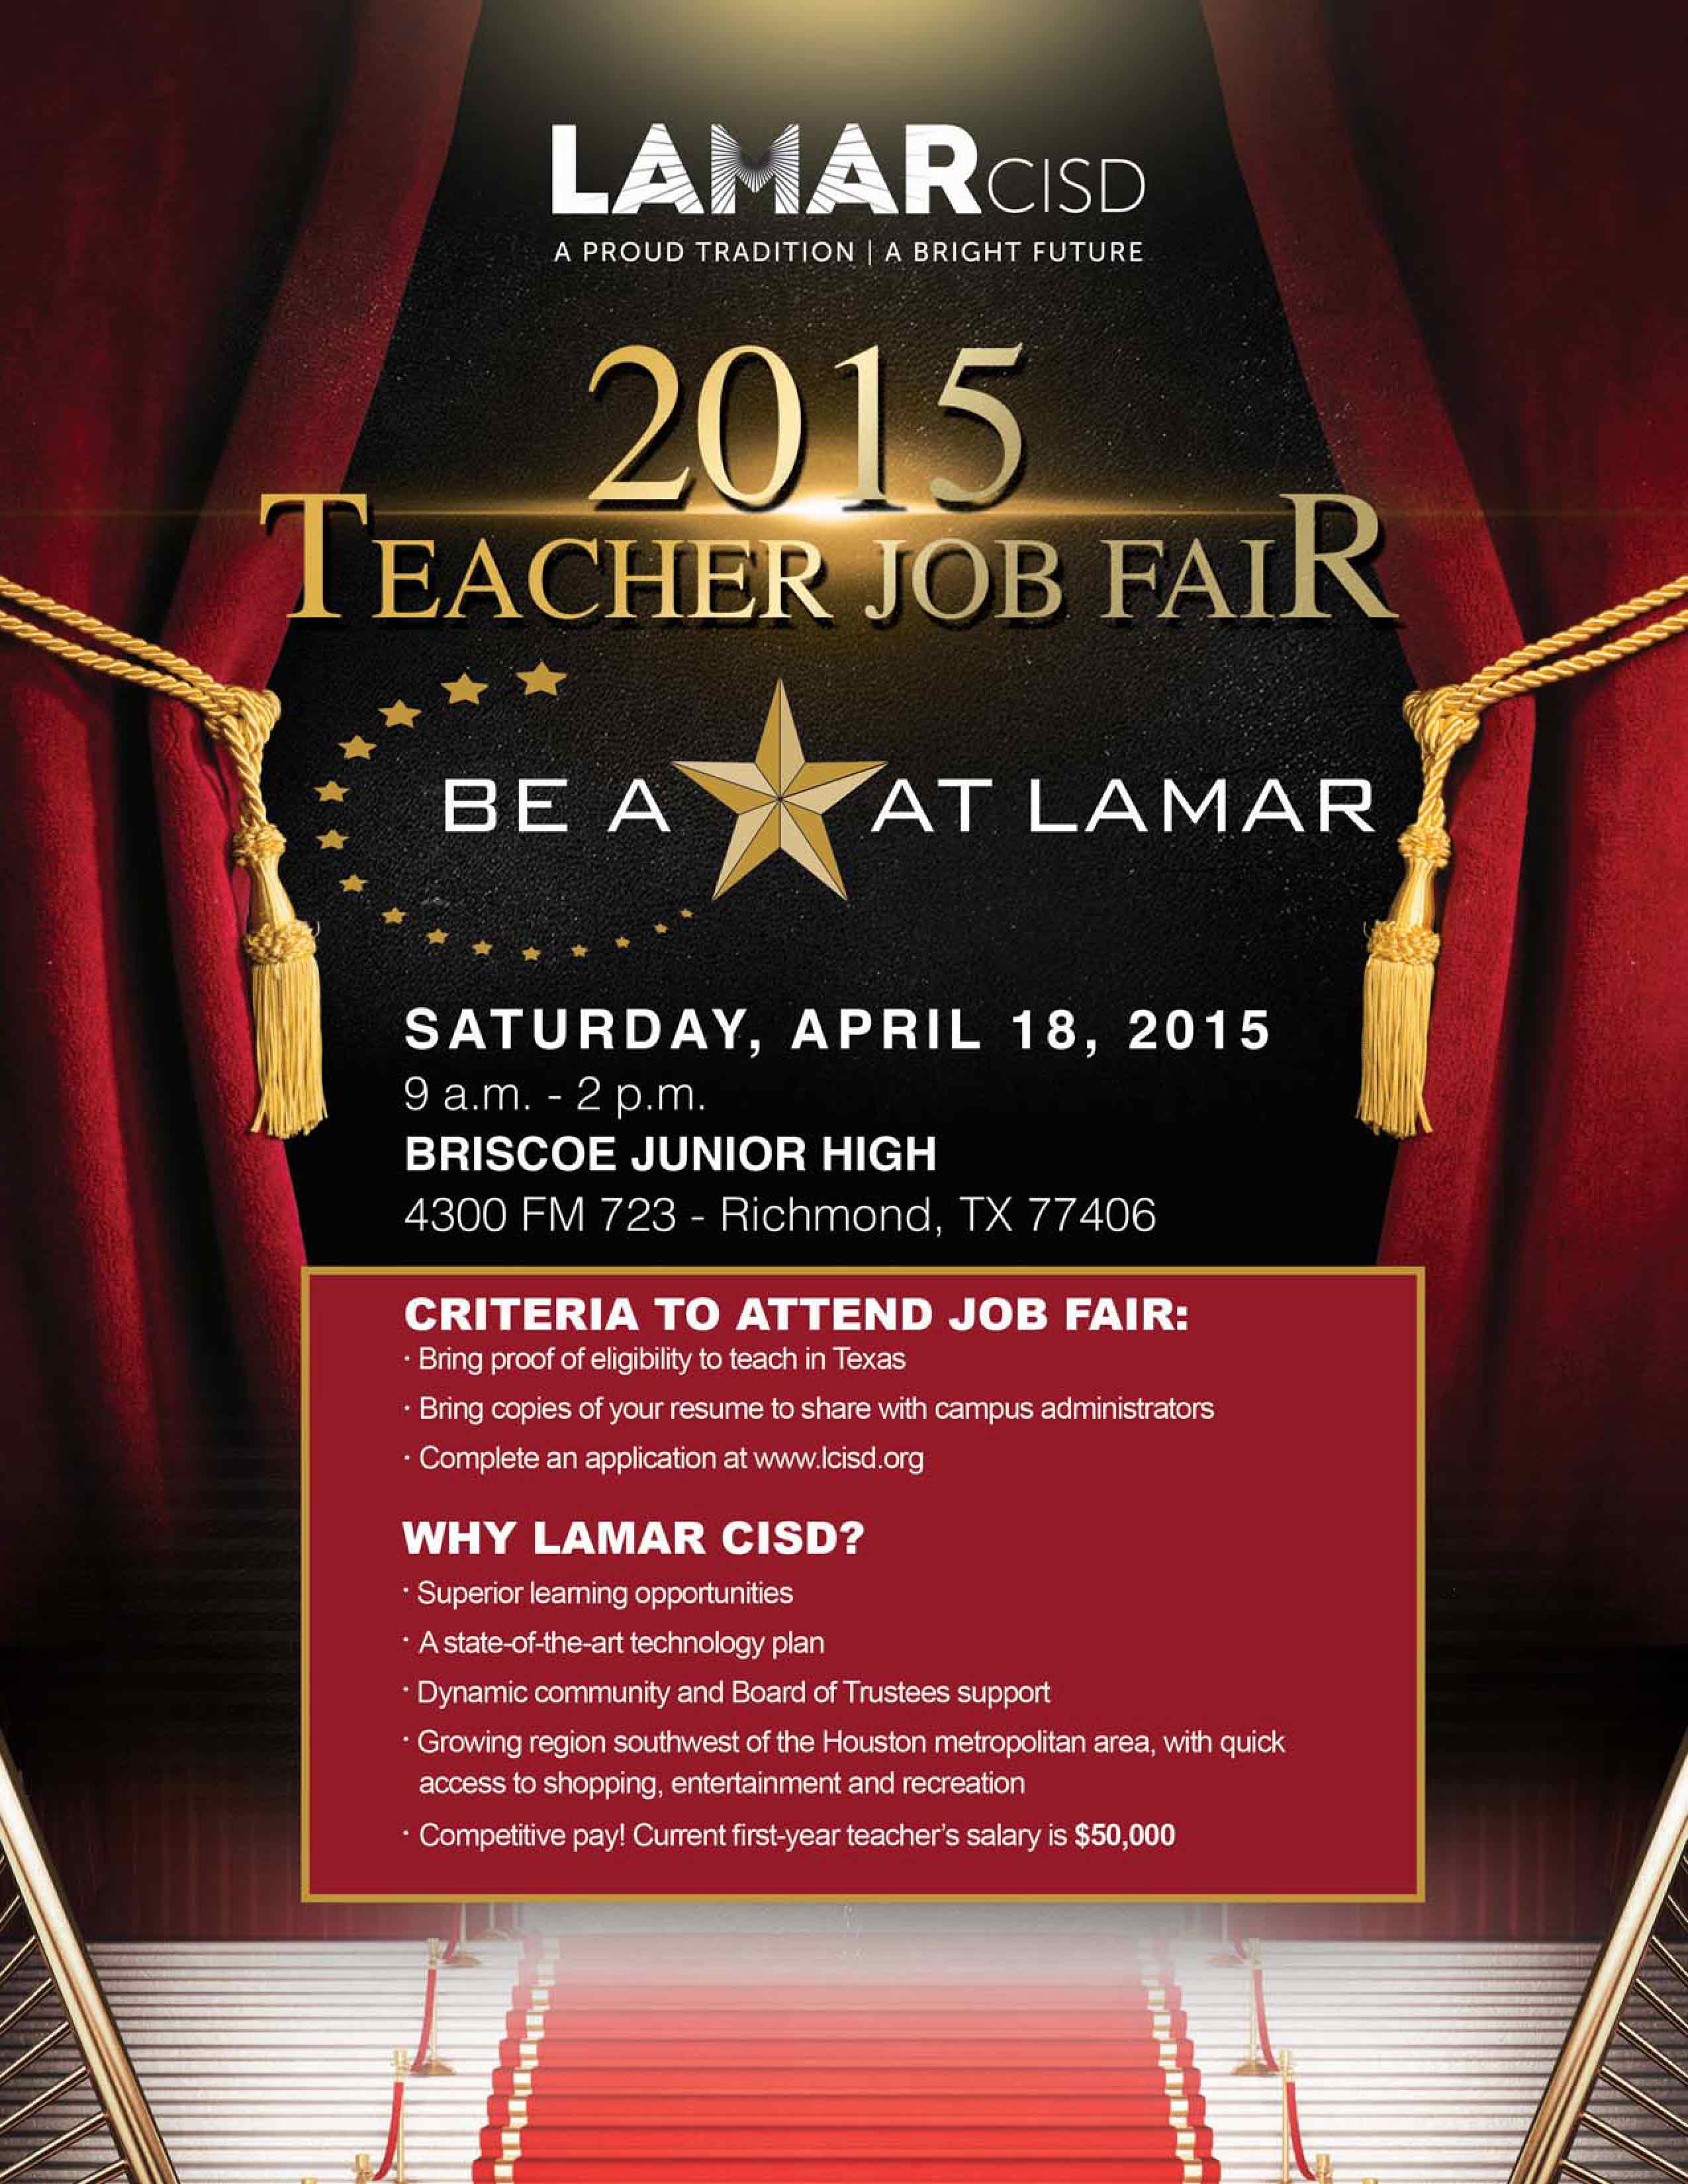 Lamar CISD Teacher Job Fair